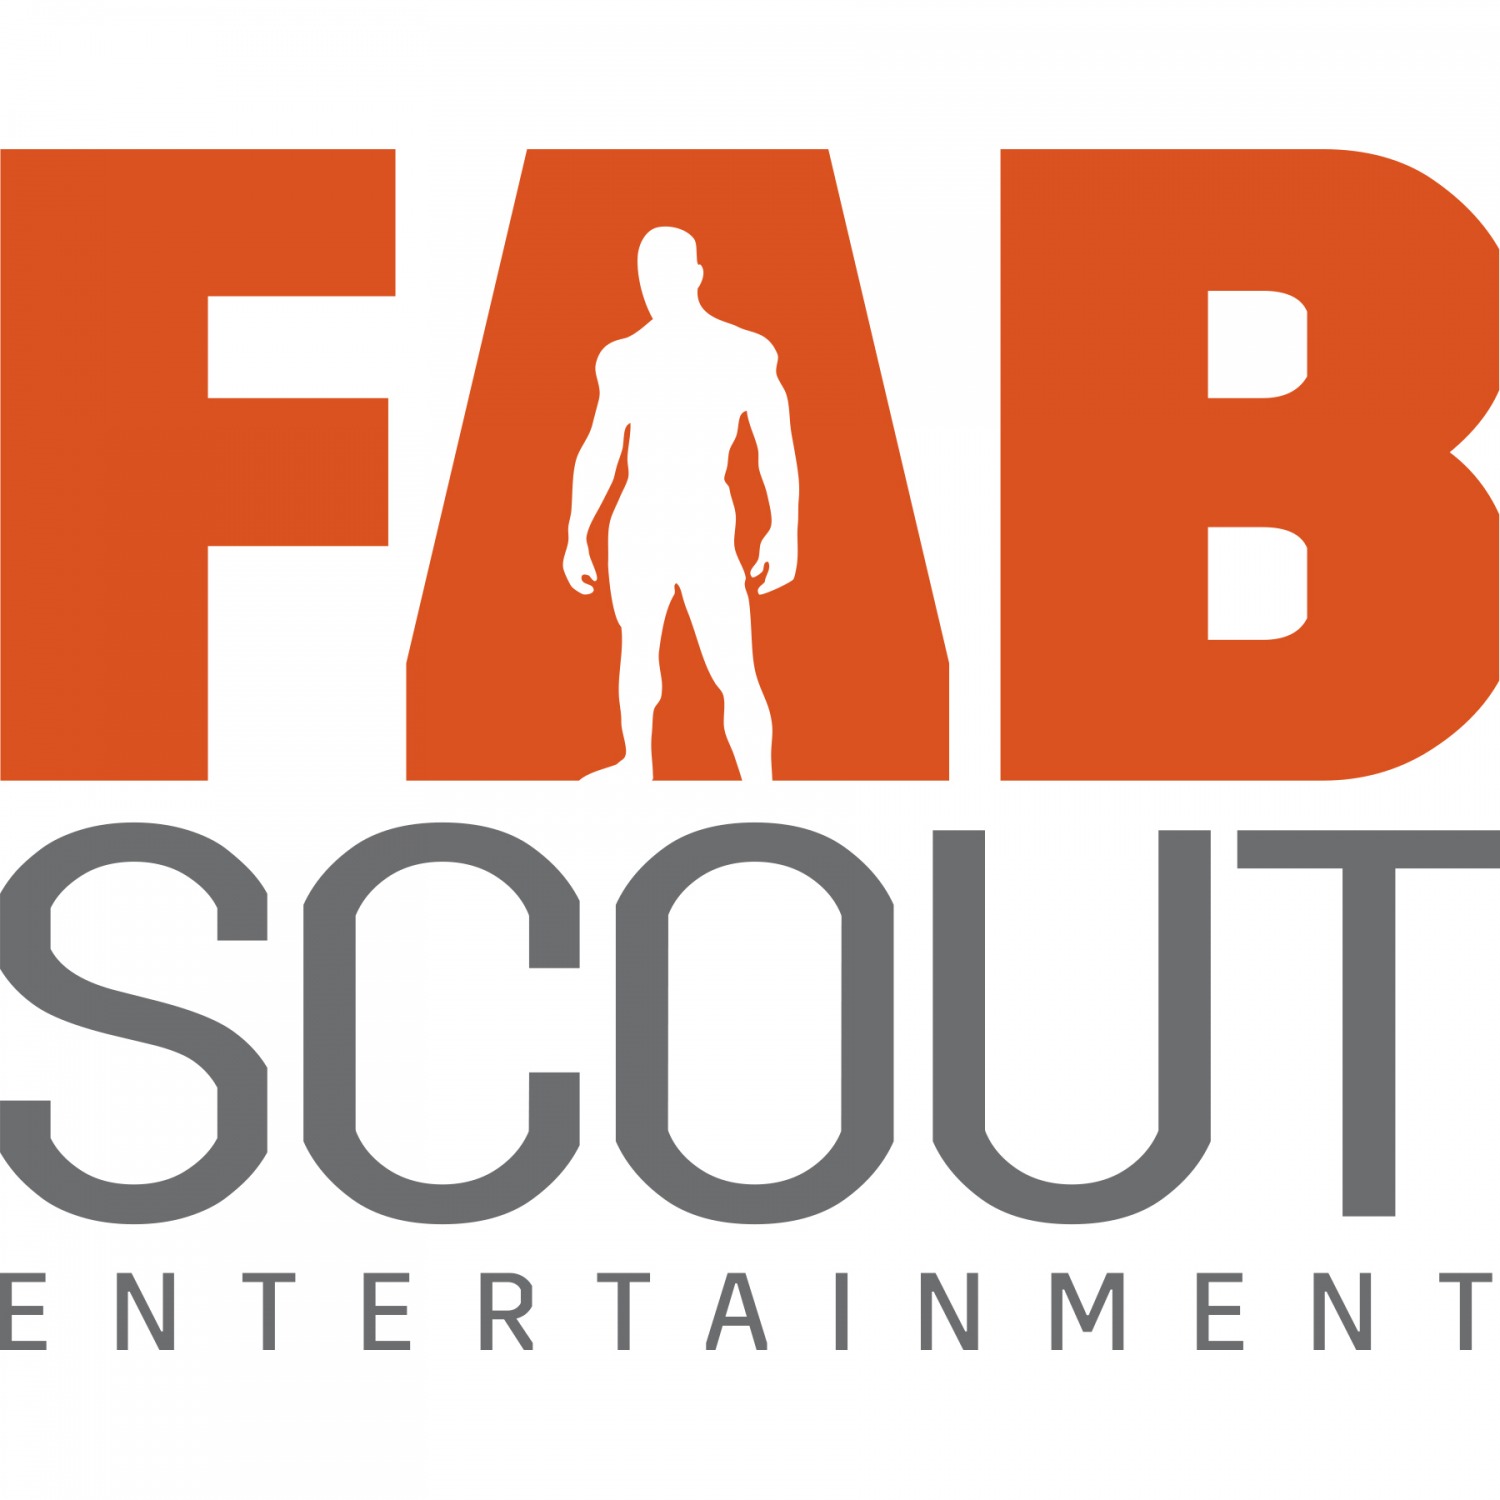 www.fabscout.com